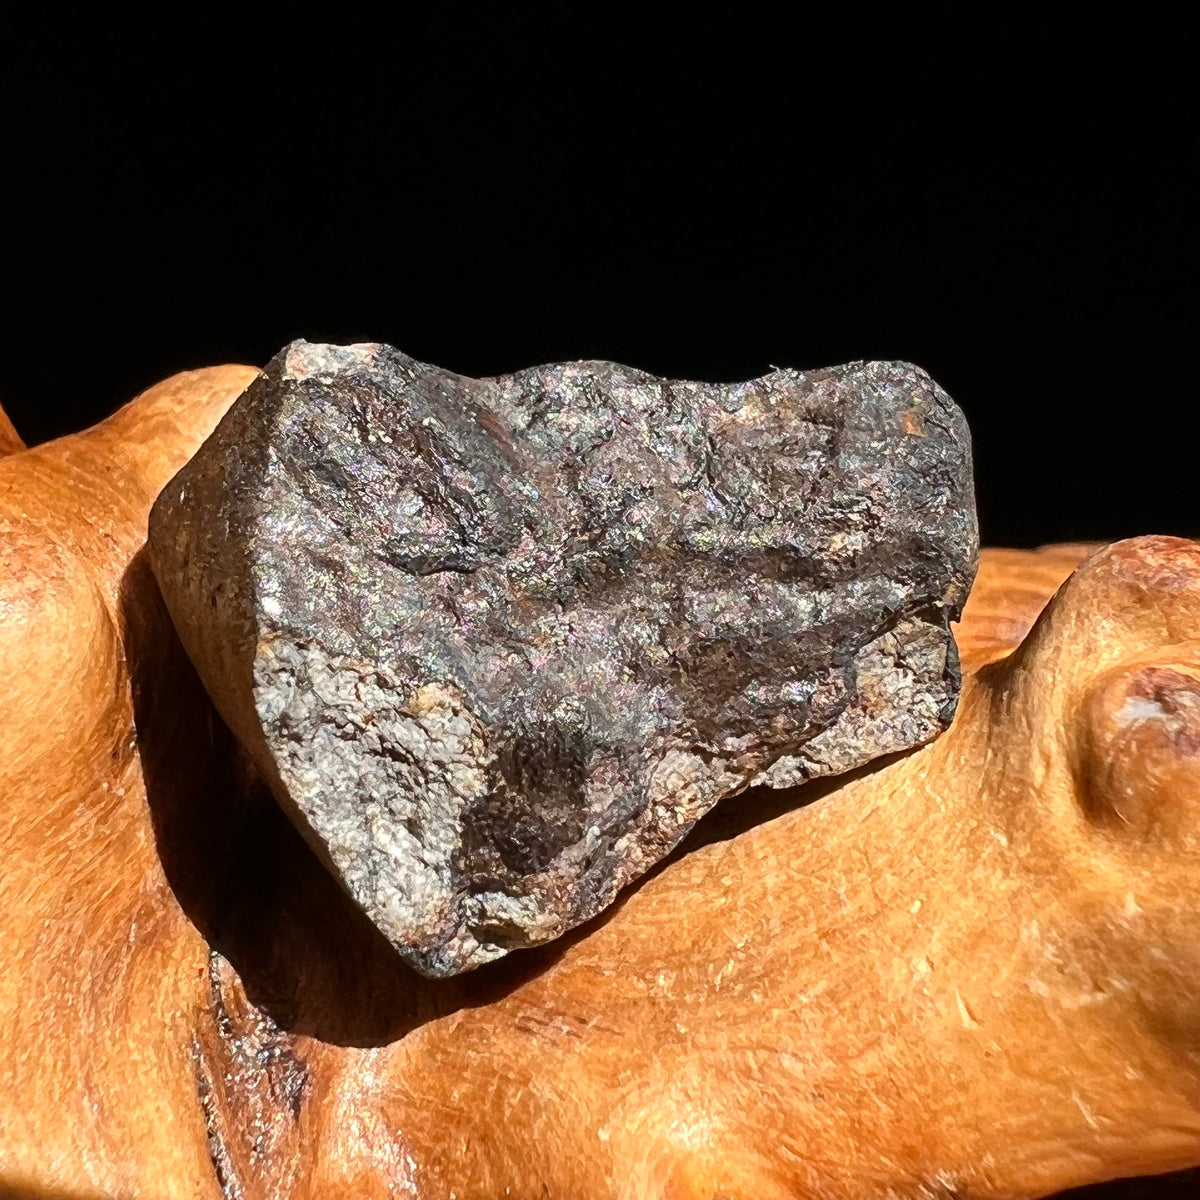 Chelyabinsk Meteorite Superbolide Asteroid 3.7 grams #5-Moldavite Life